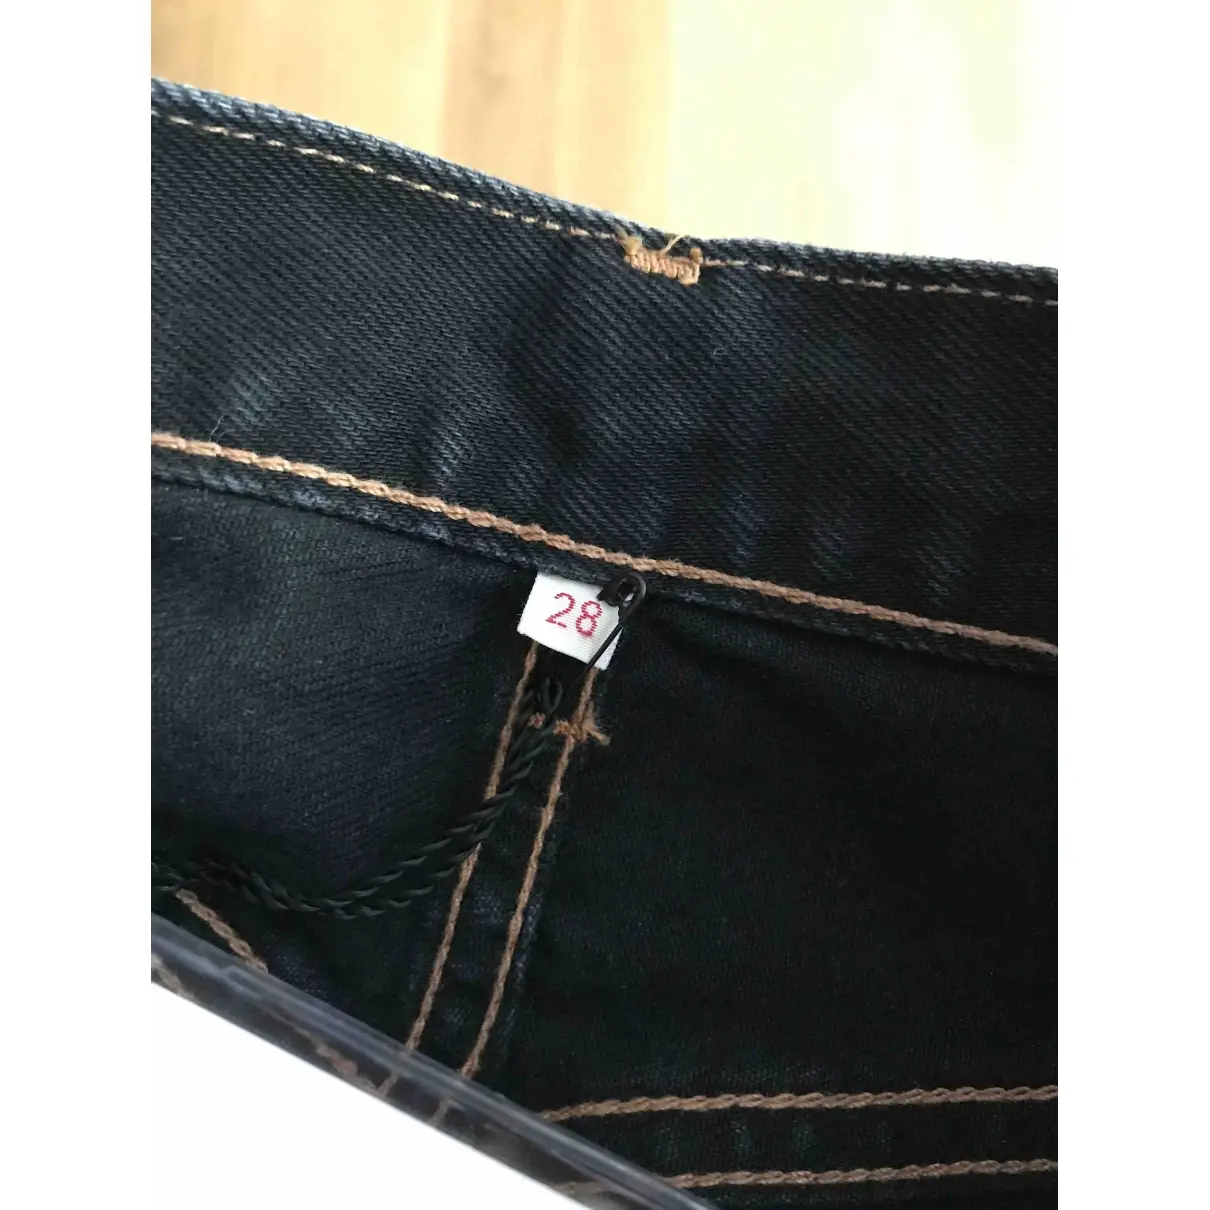 Buy Wardrobe NYC Slim jeans online